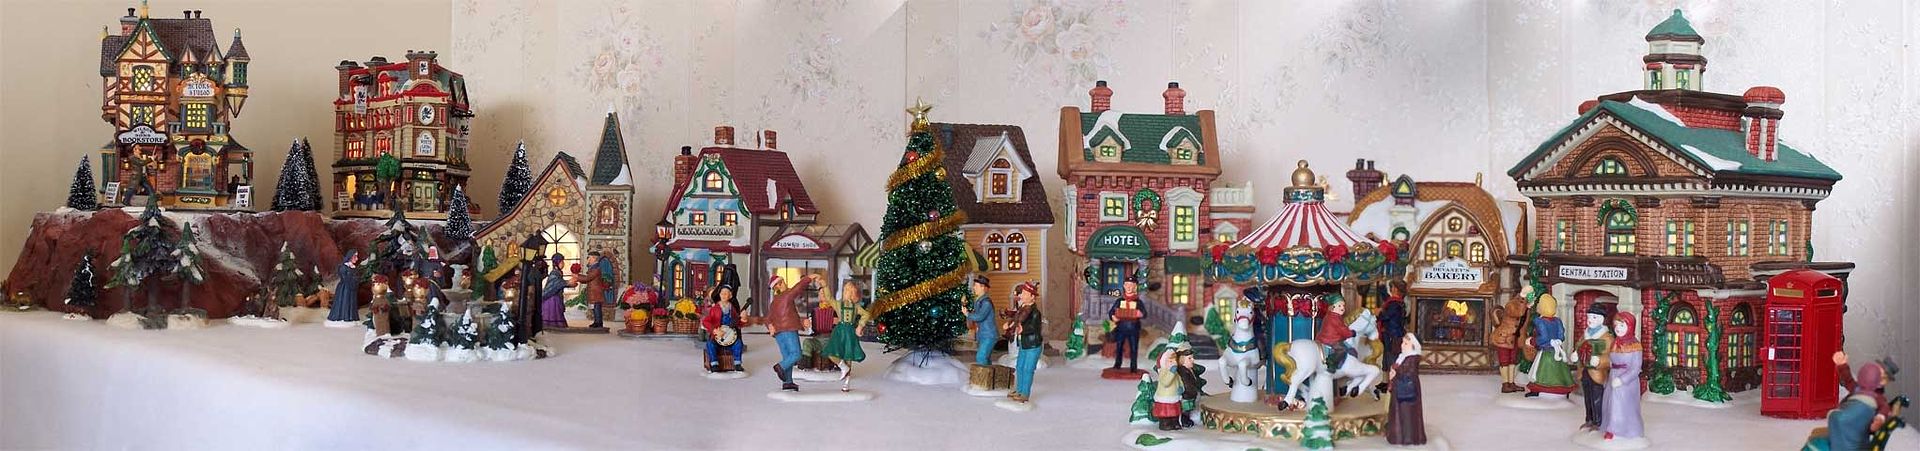 Merry Christmas Village